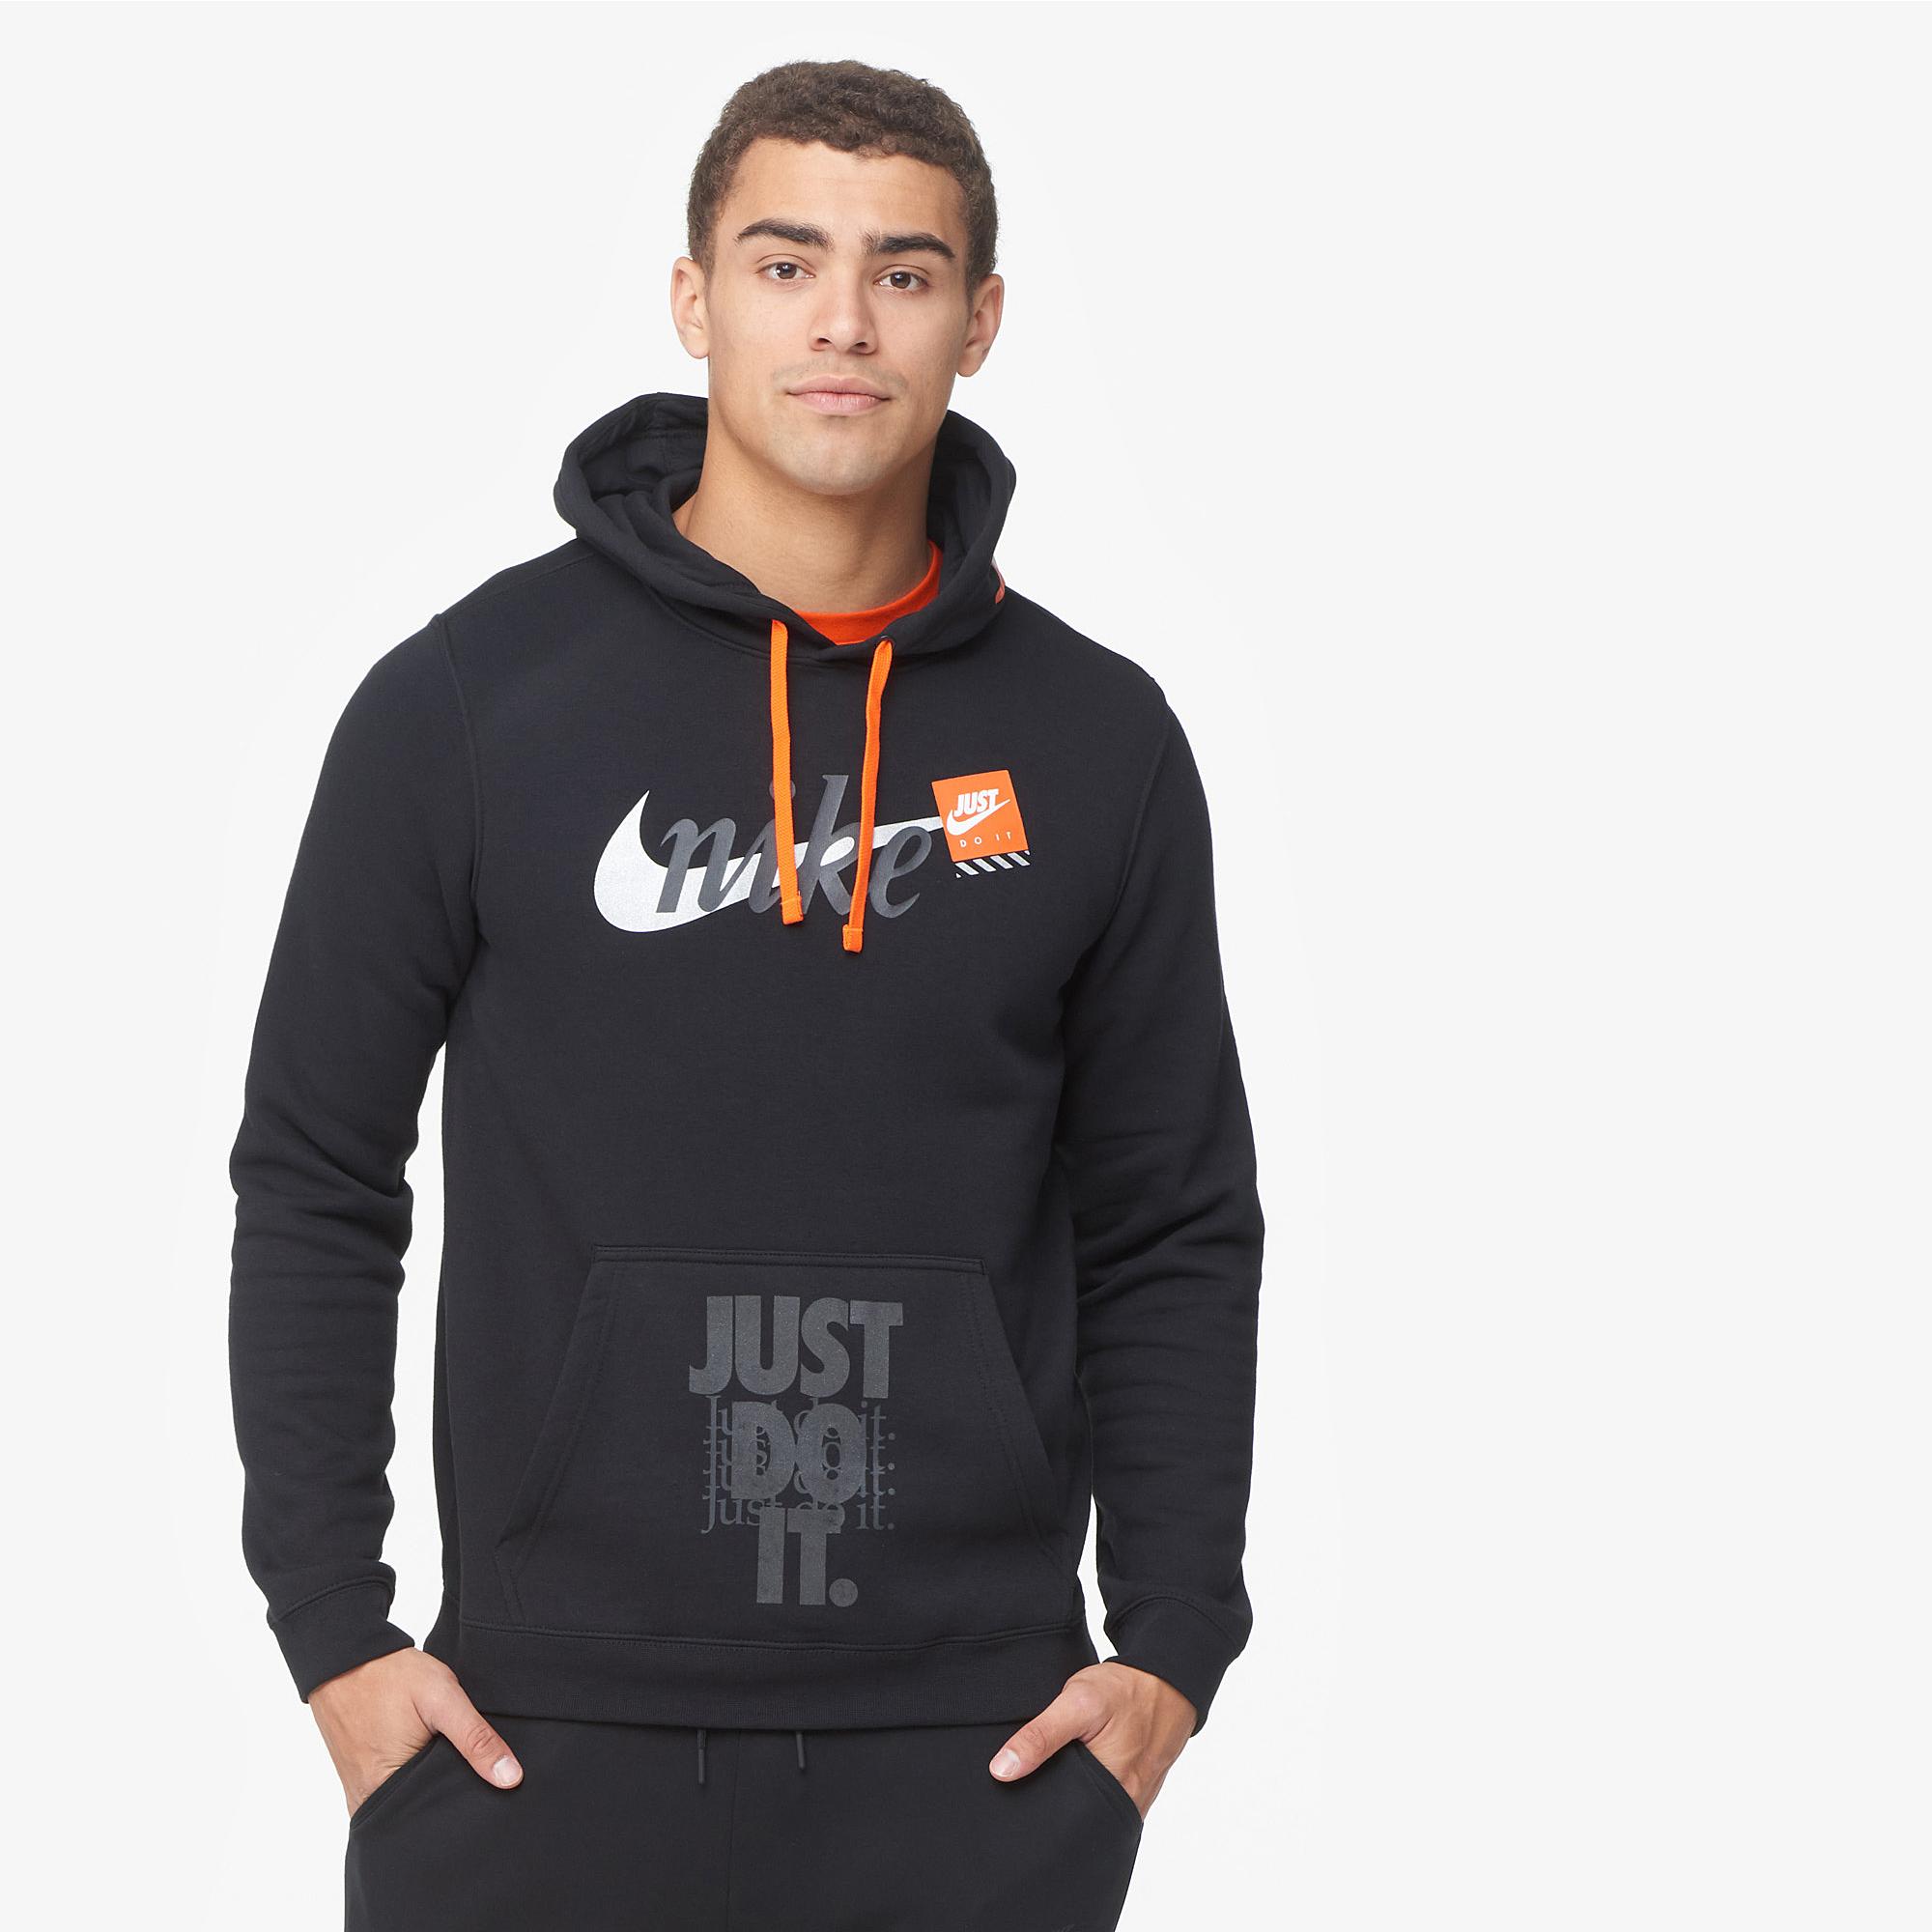 frelsen Morgenøvelser cricket Nike Fleece Jdi Club Pullover Hoodie in Black for Men - Lyst